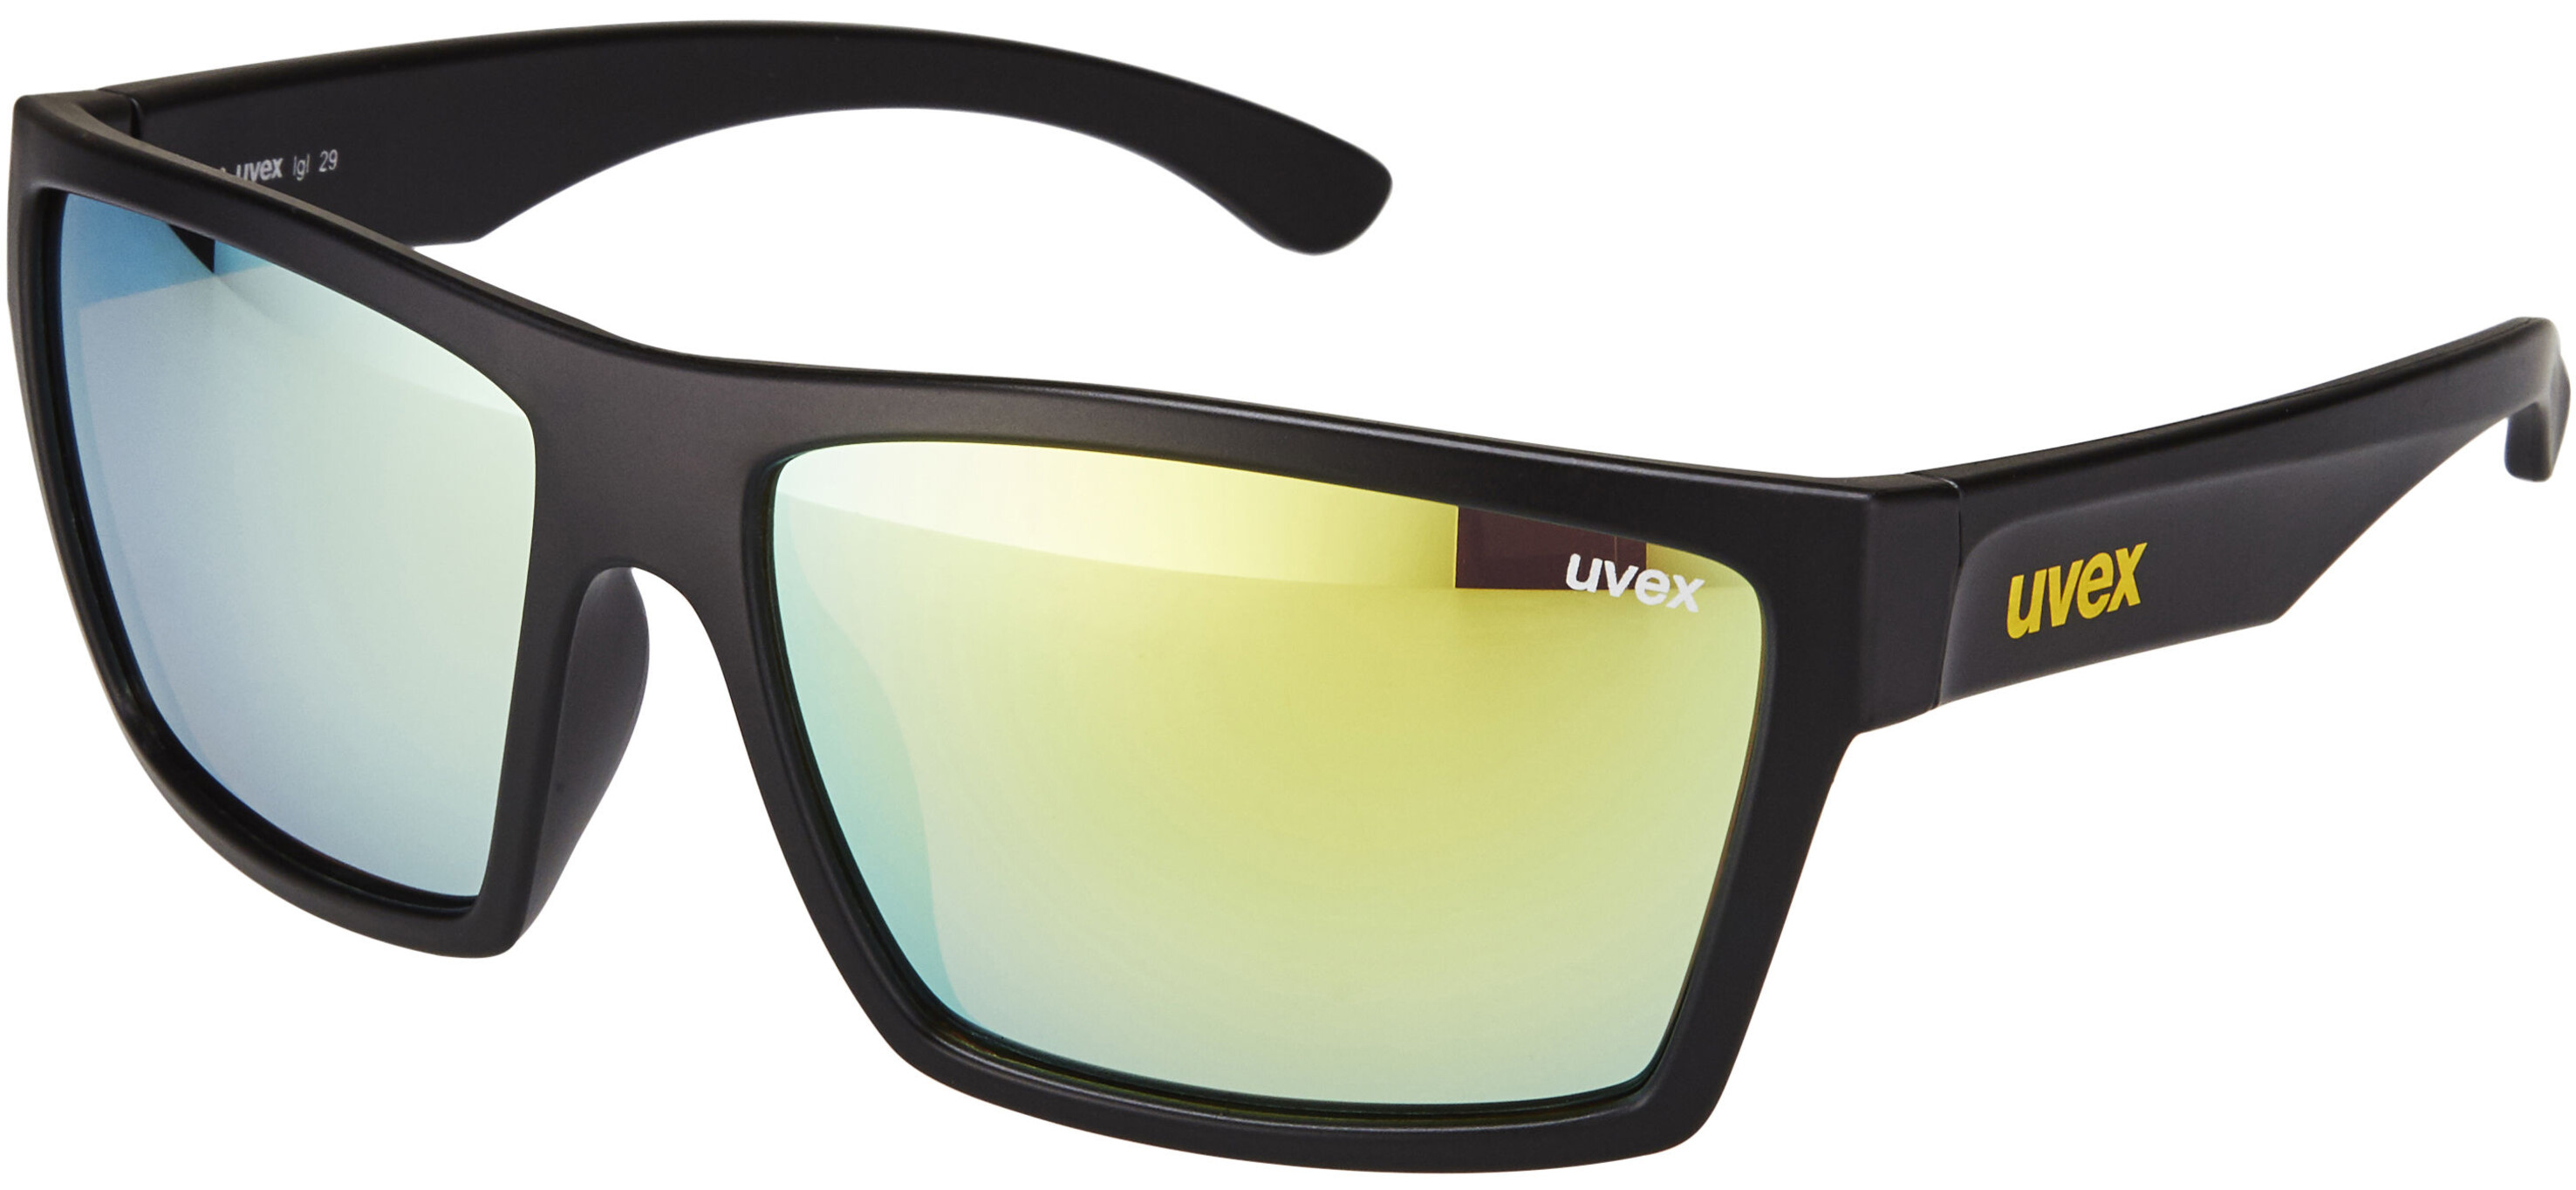 UVEX lgl 29 Glasses black mat at Bikester.co.uk